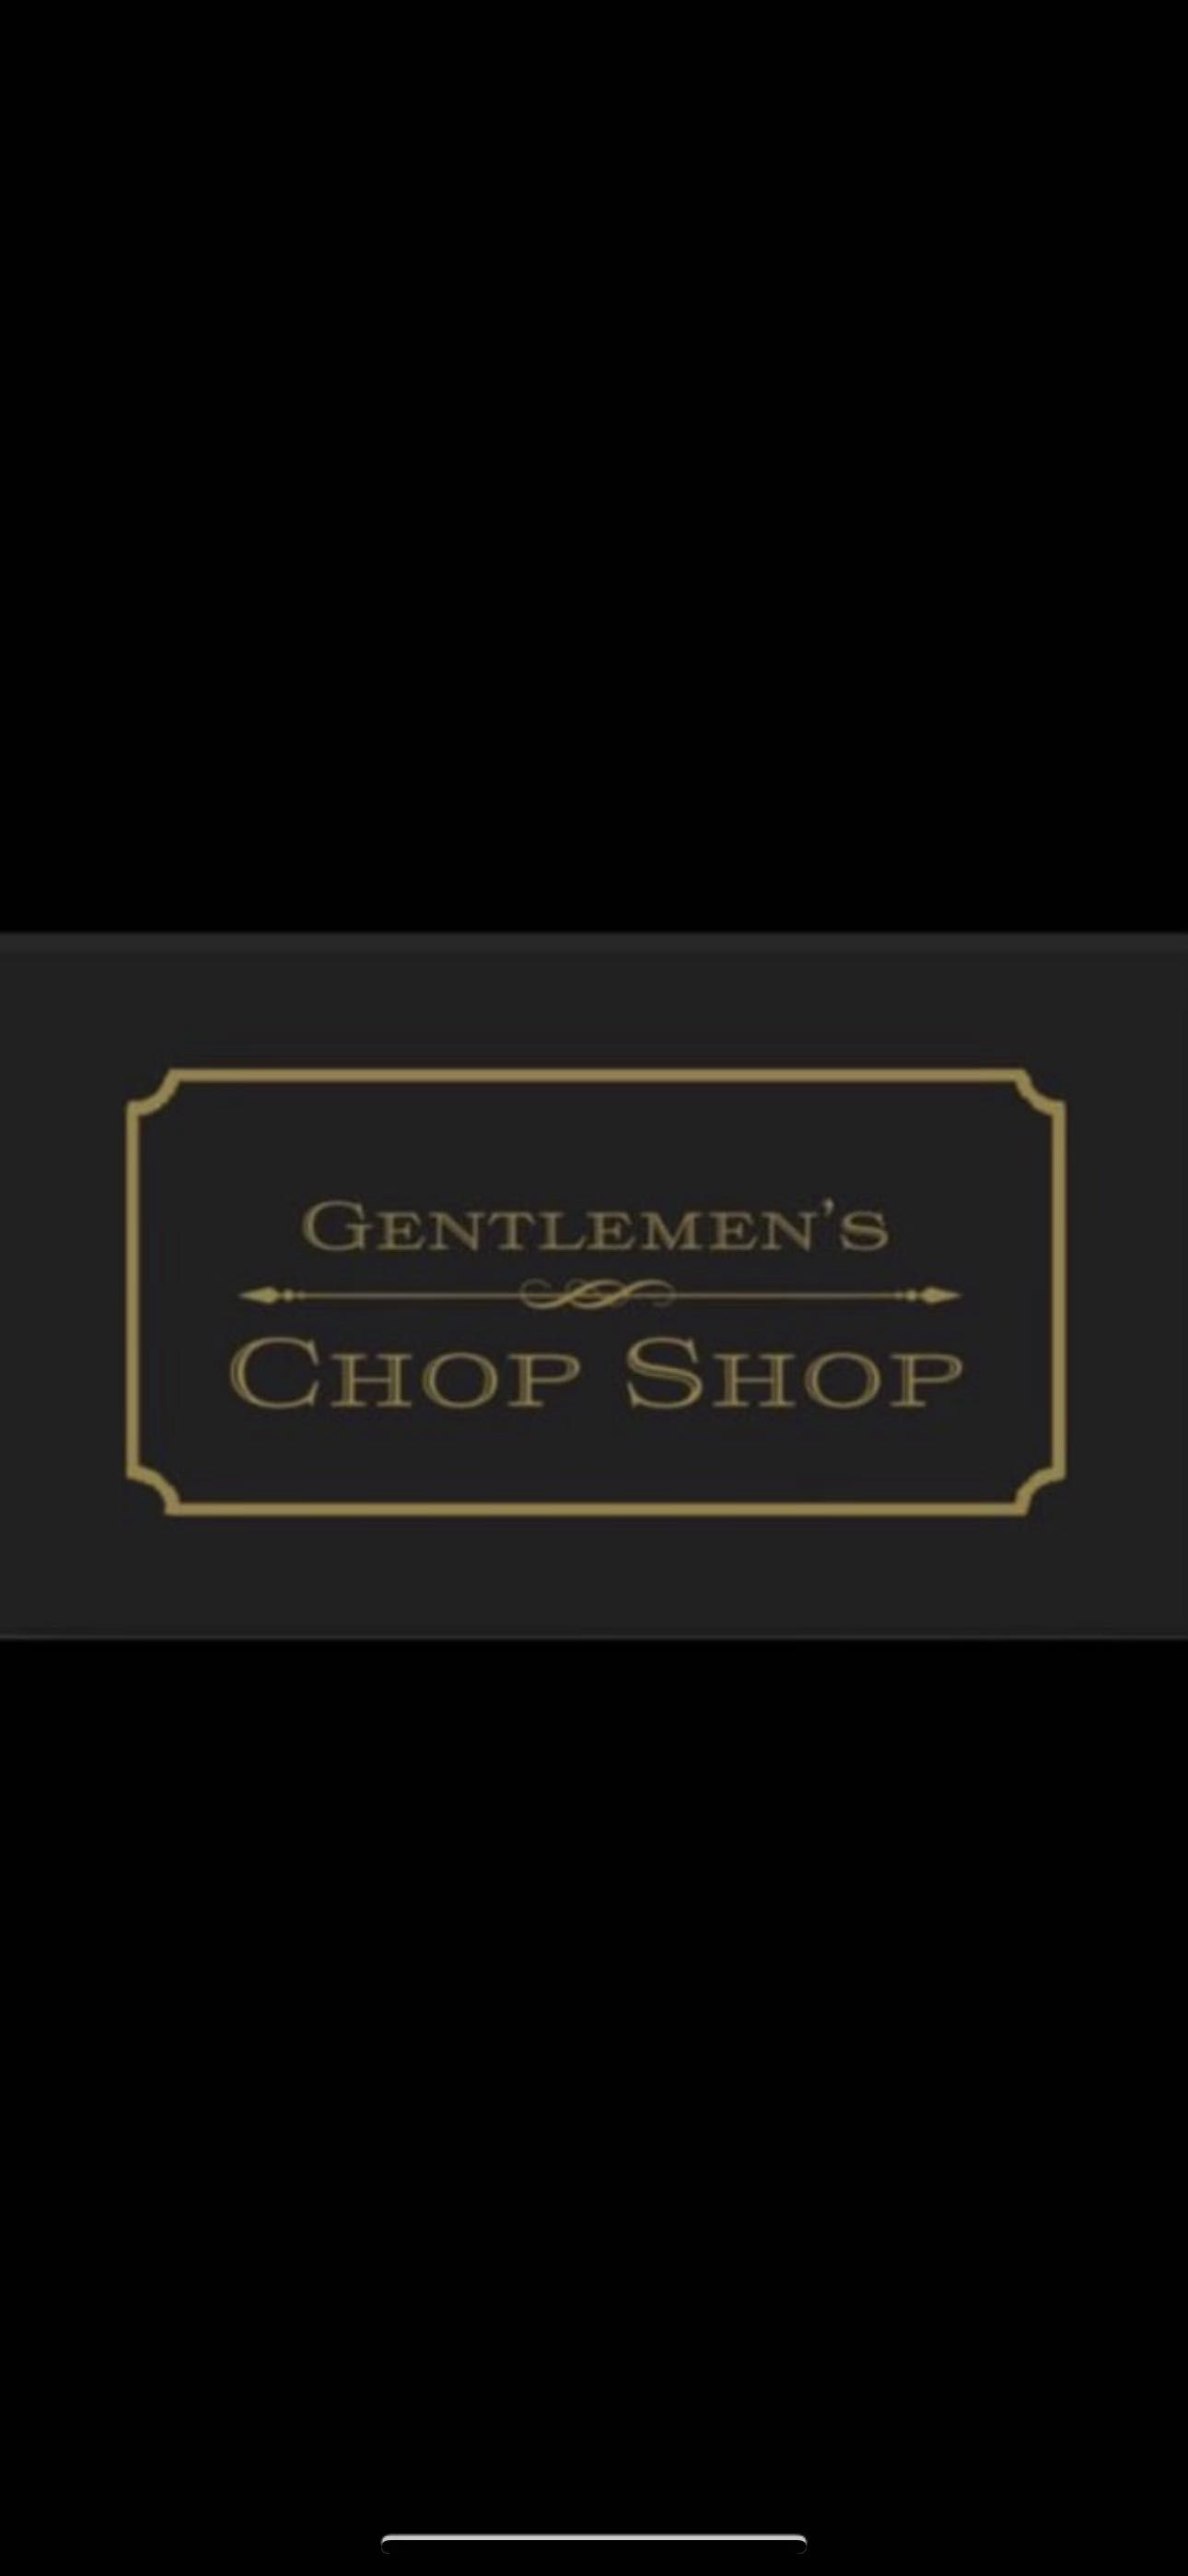 Gentlemens Chop Shop (Glen Cove), 187 Forest Ave, Glen Cove, 11542